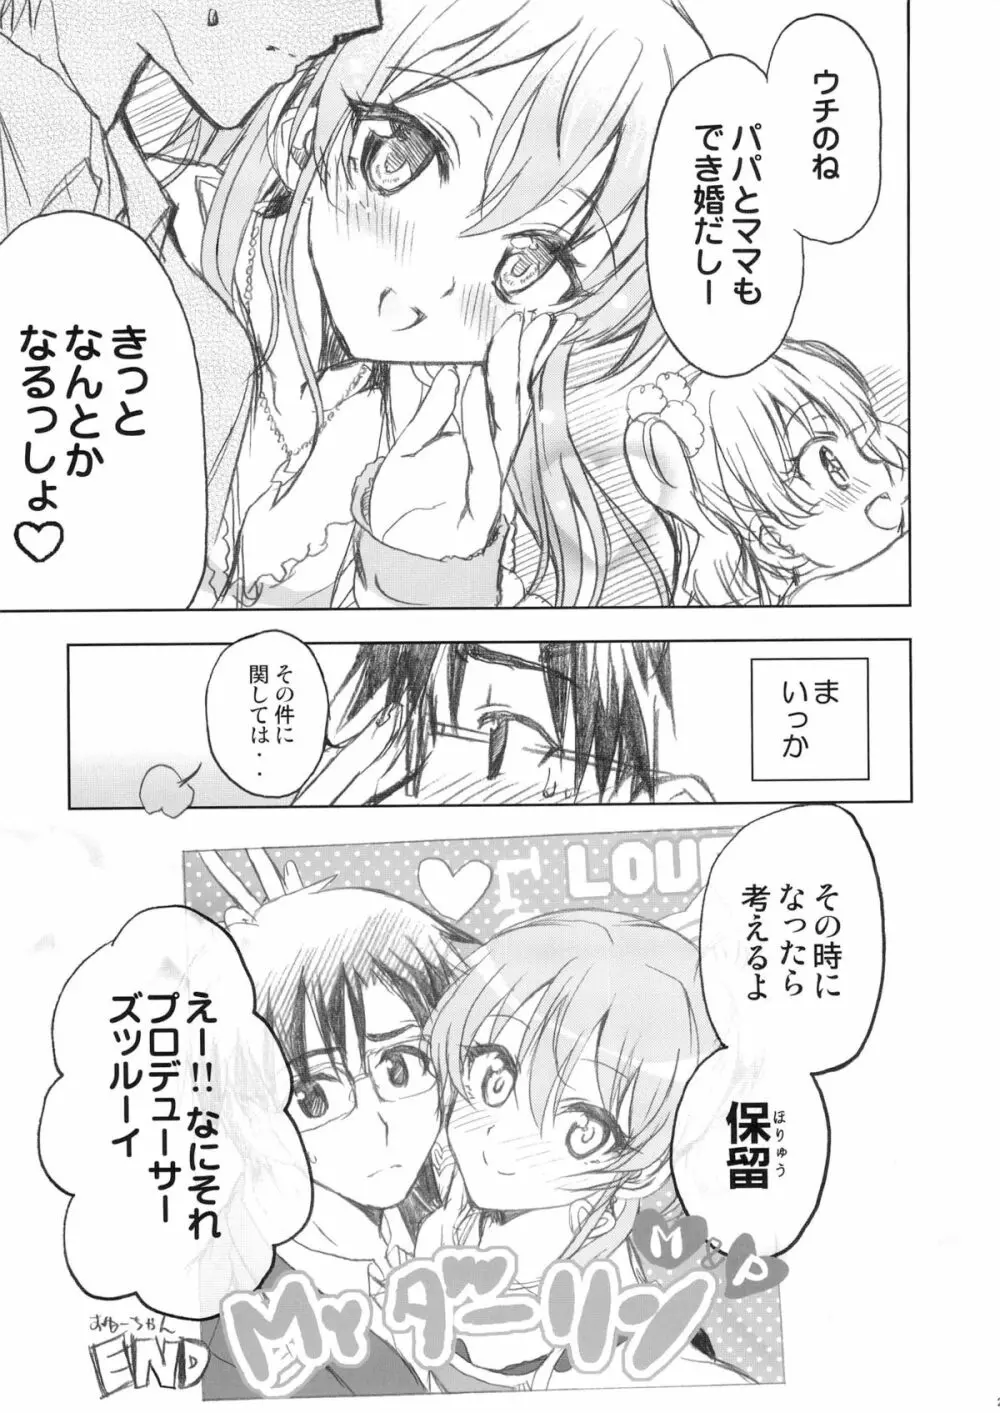 PASSION FRUITS GIRLS #2 「城ケ崎美嘉」 24ページ